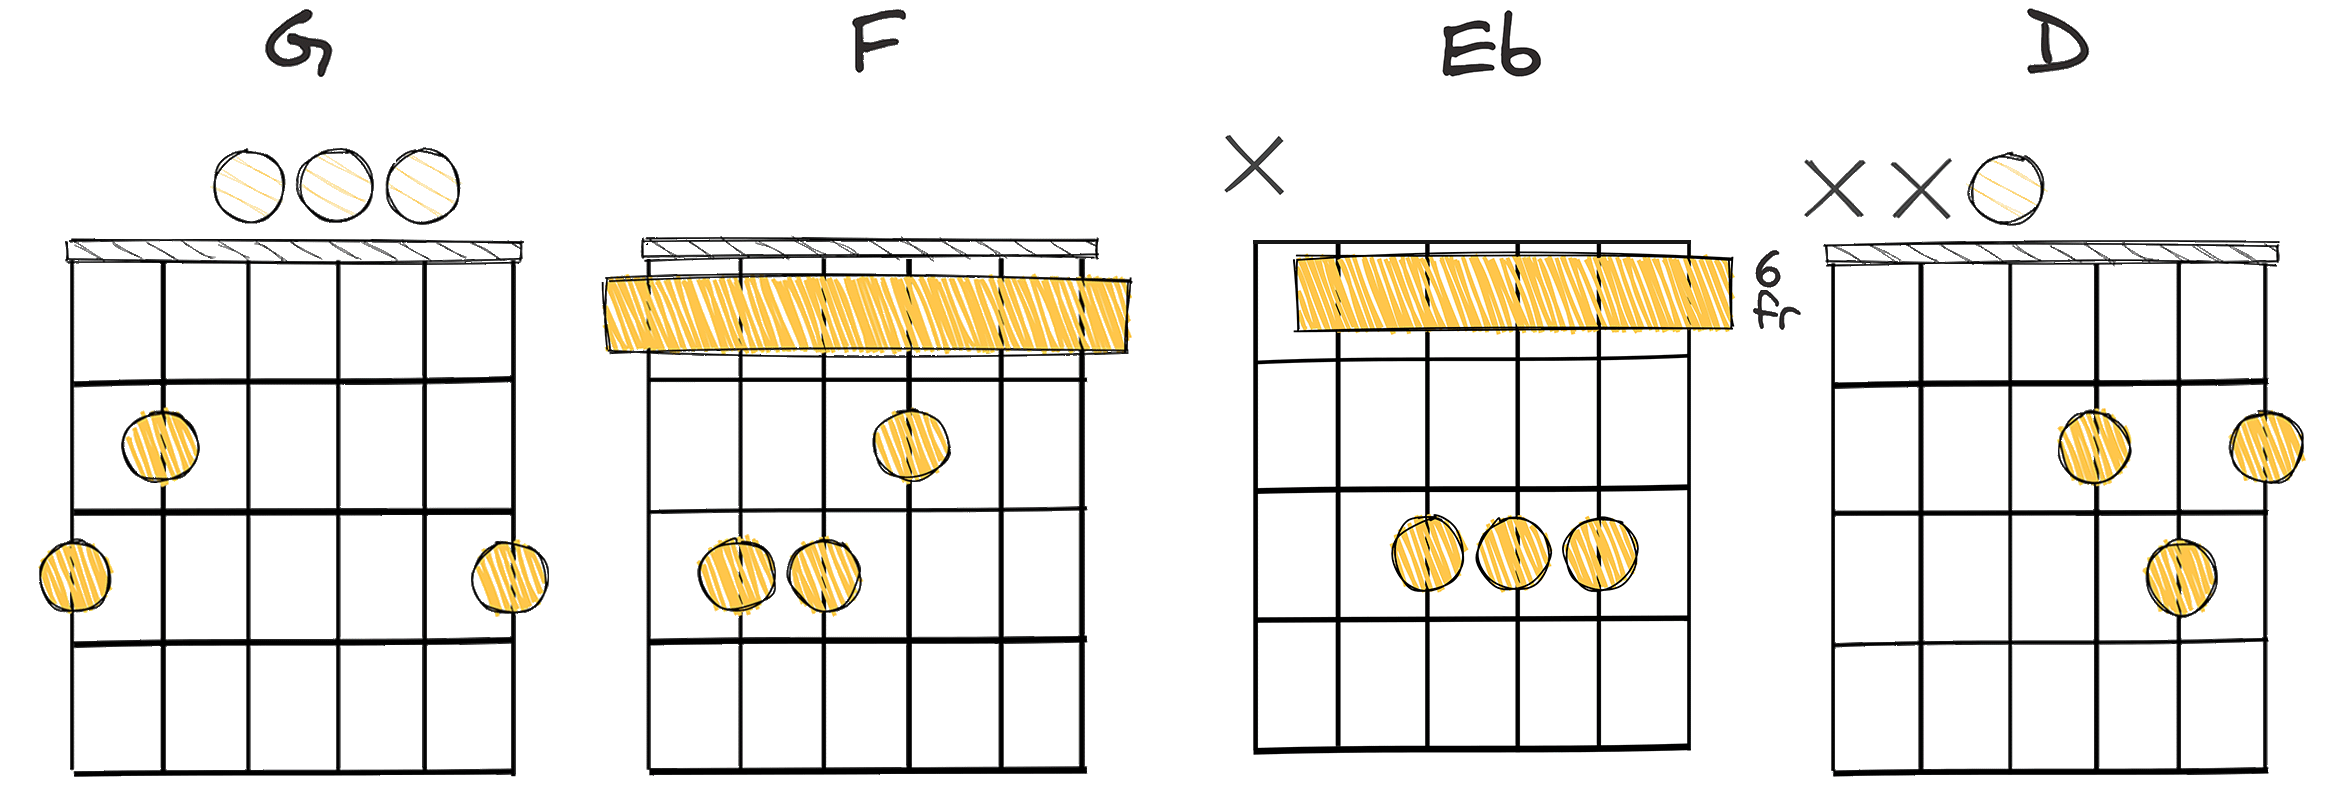 I - vi - IV - V (1 - 6 - 4 - 5) chords diagram